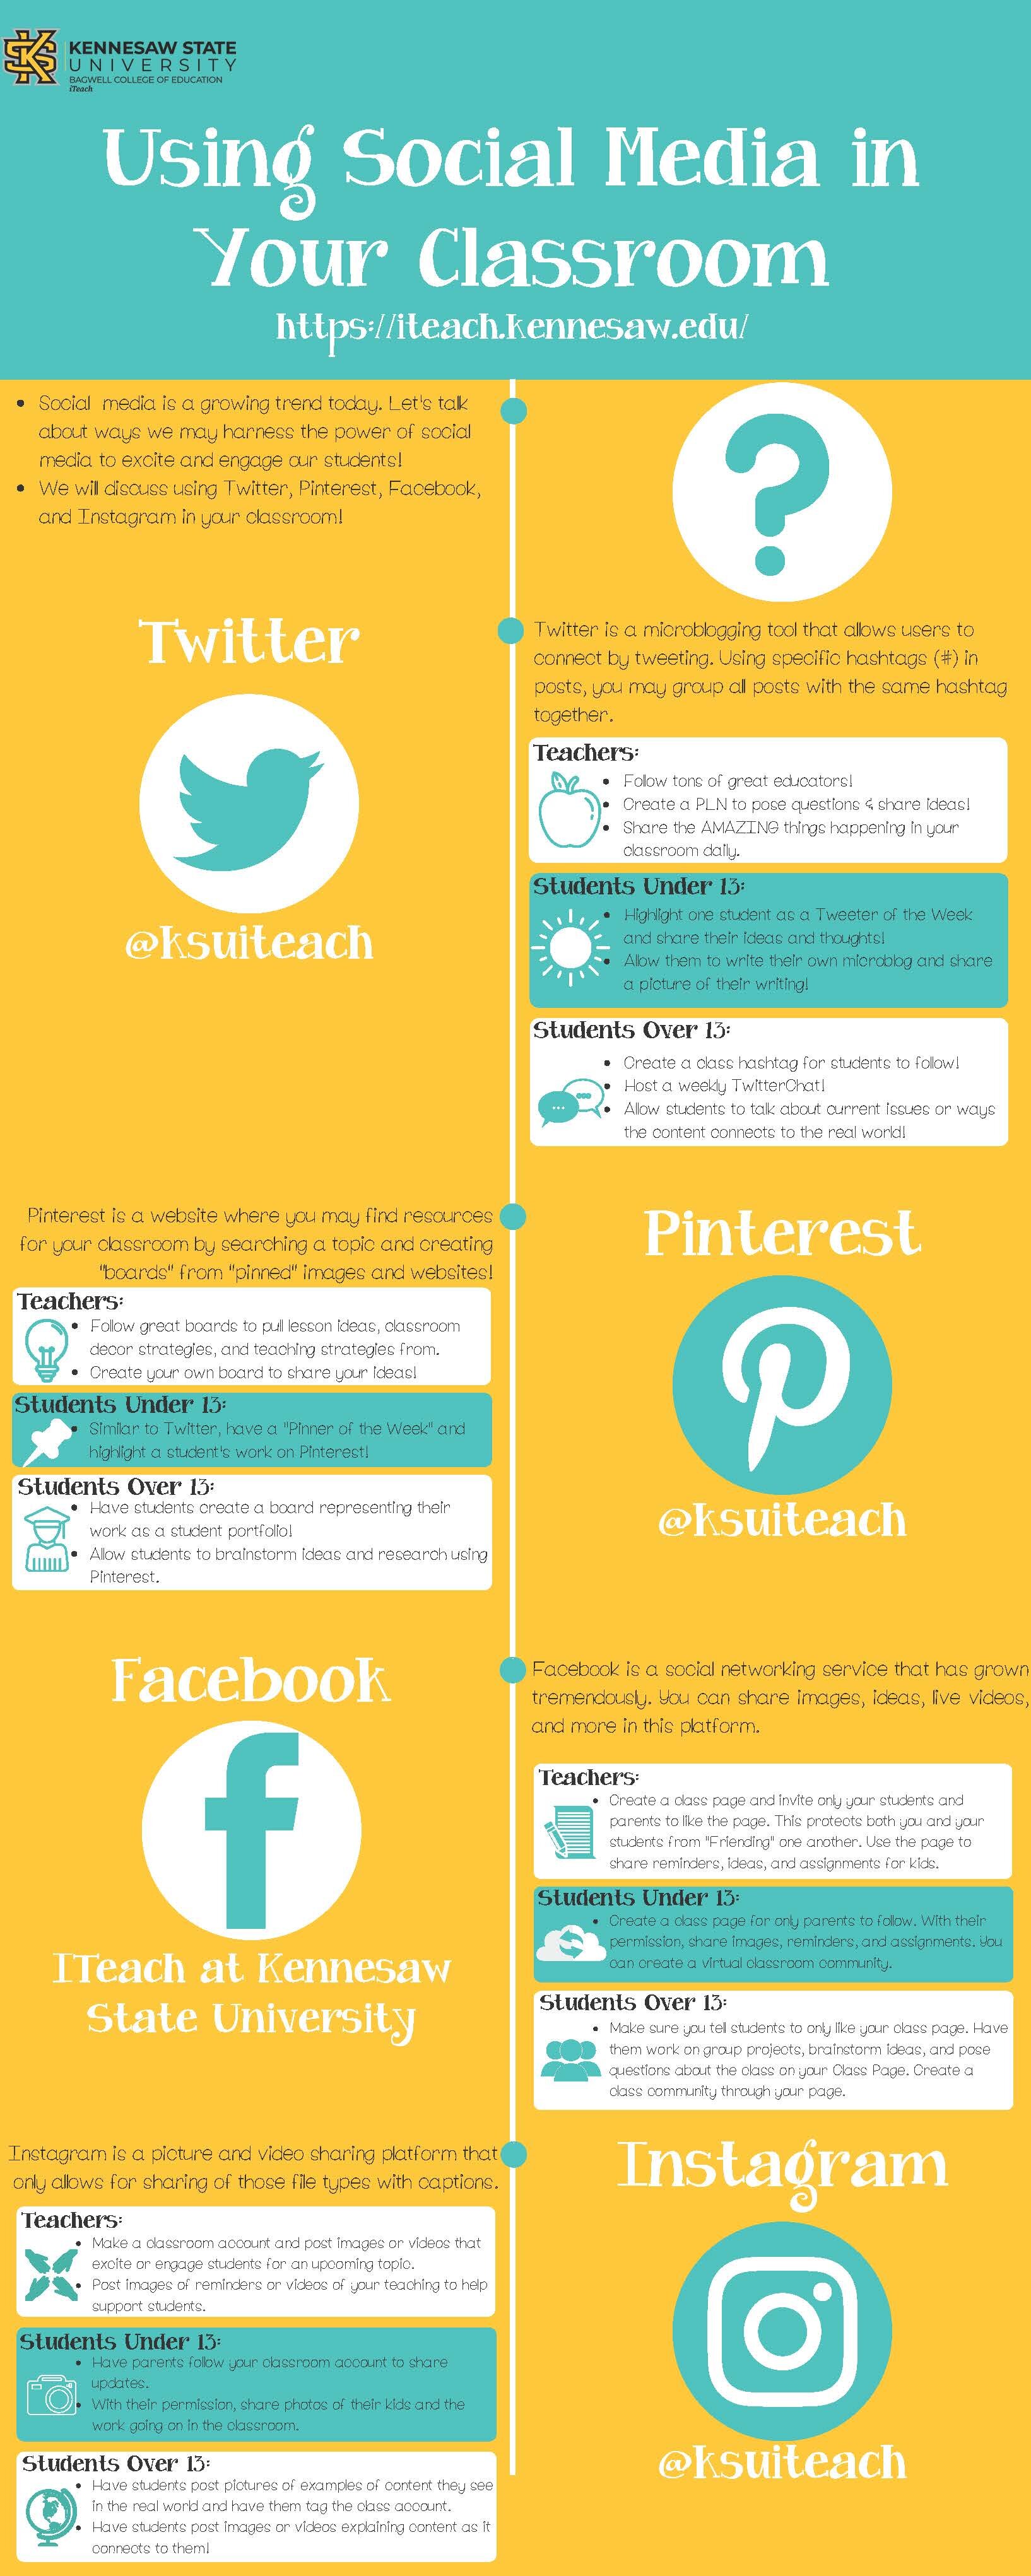 Using Social Media in Your Classroom.jpg